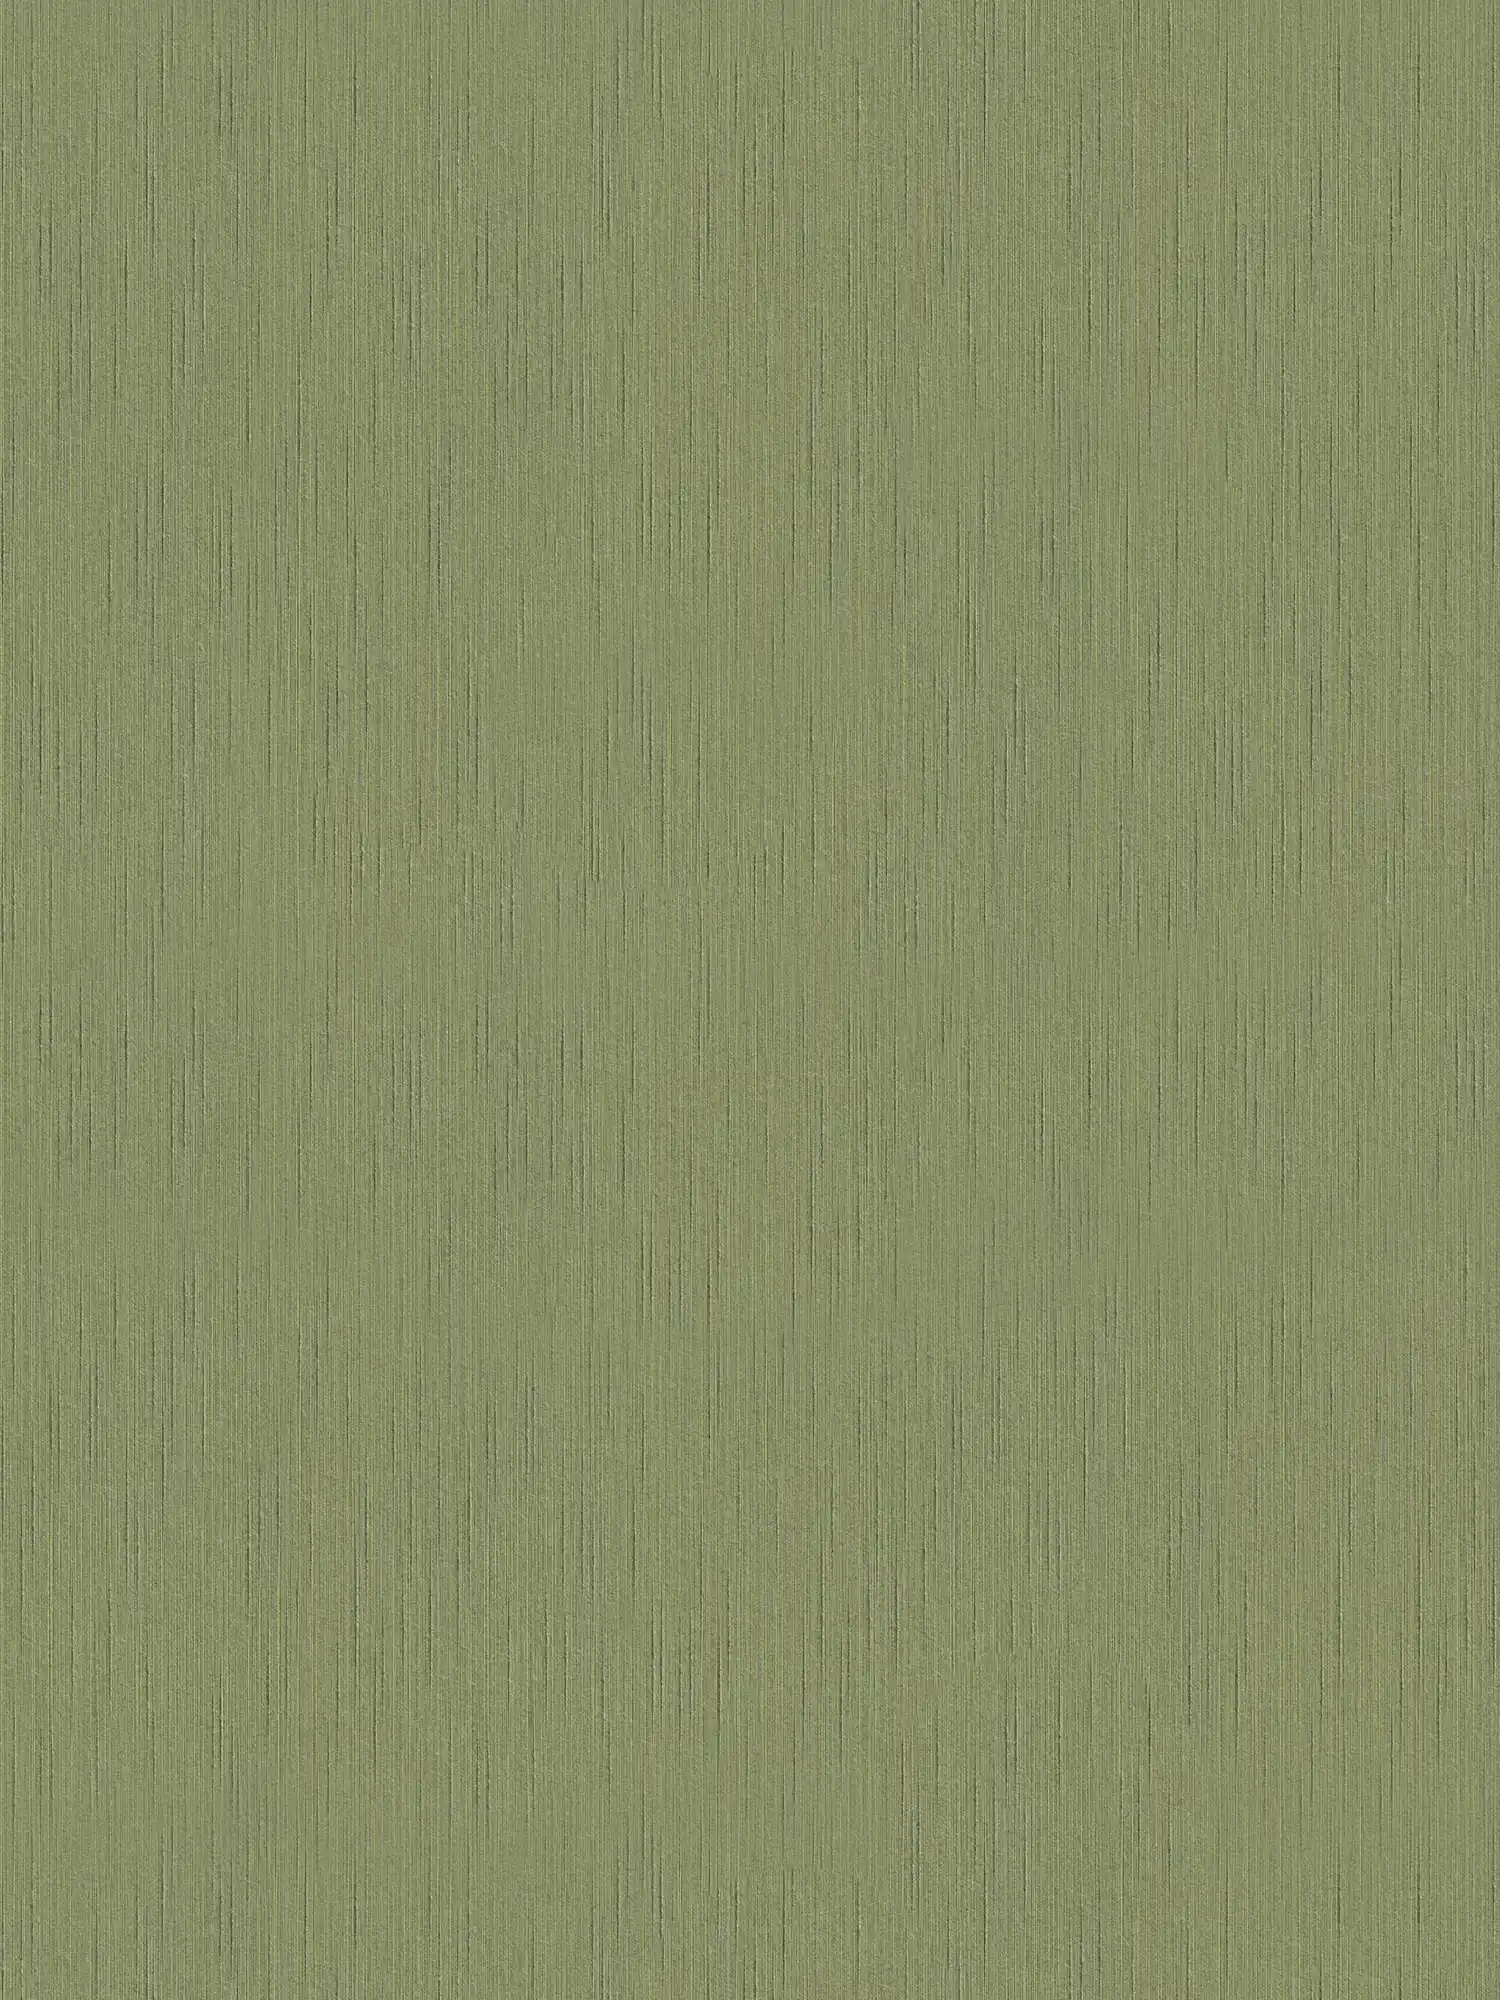 Dunkelgrüne Vliestapete mit melierter Struktur – Grün
